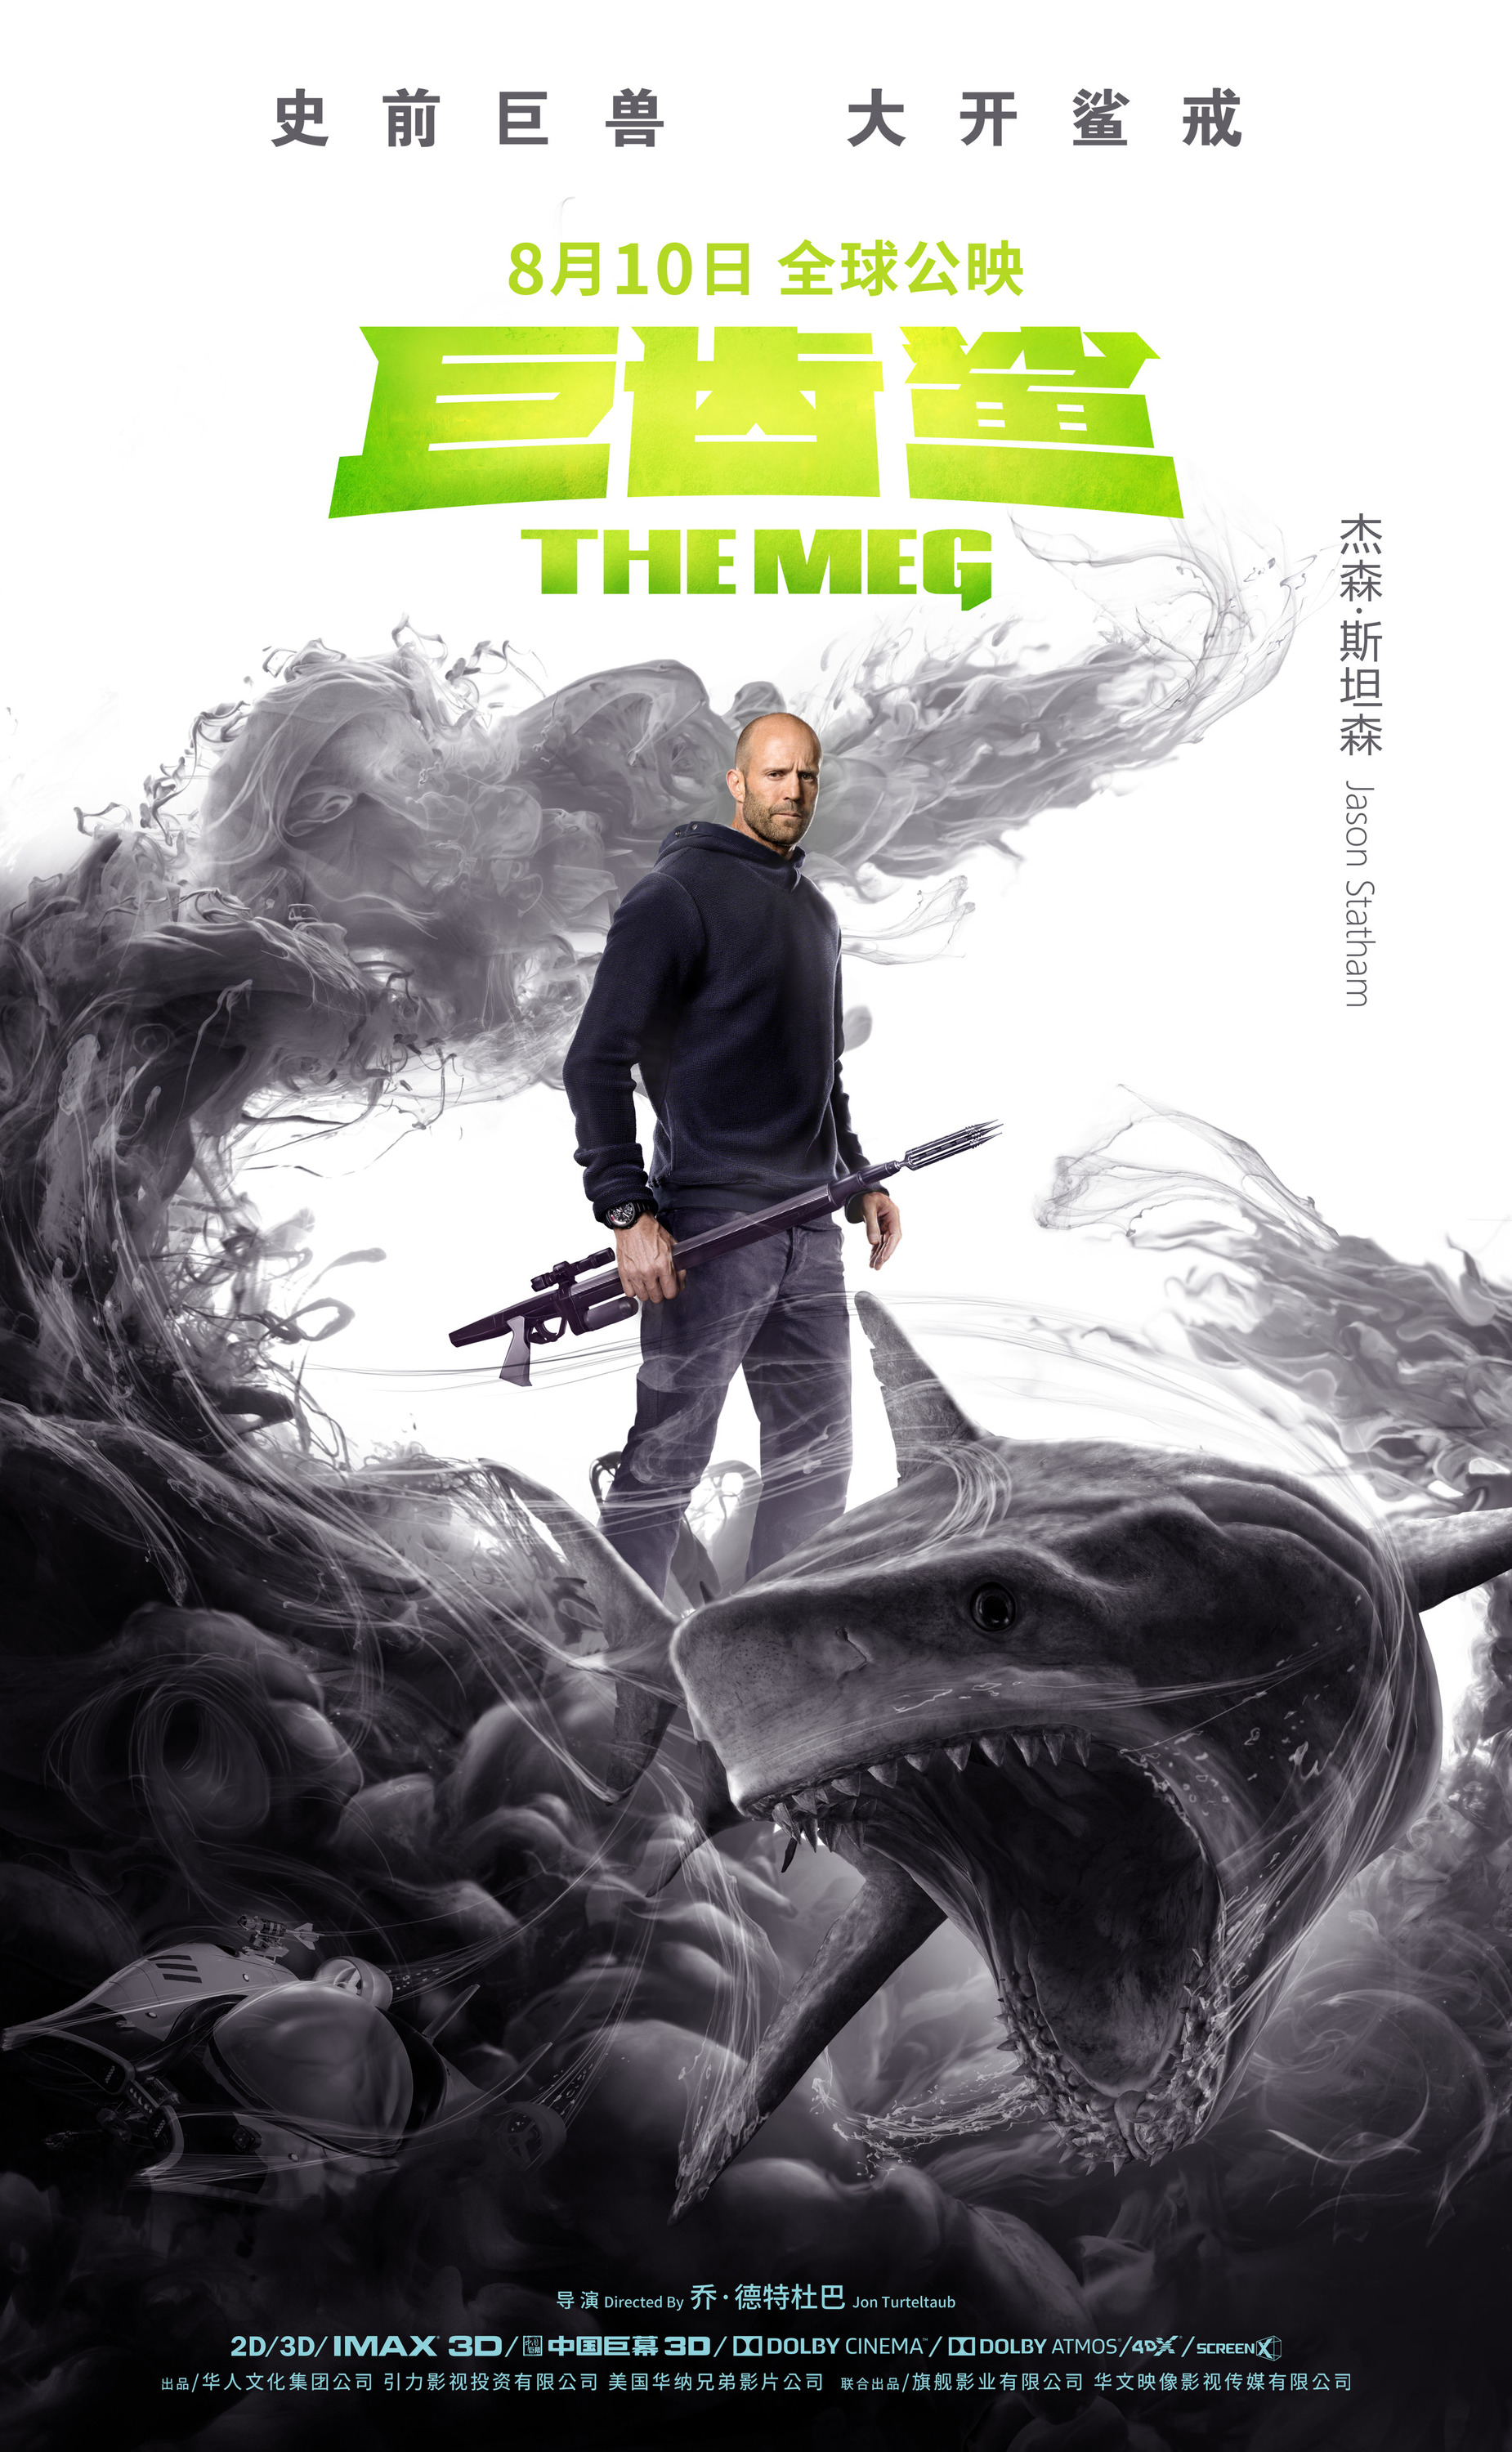 Mega Sized Movie Poster Image for The Meg (#26 of 26)